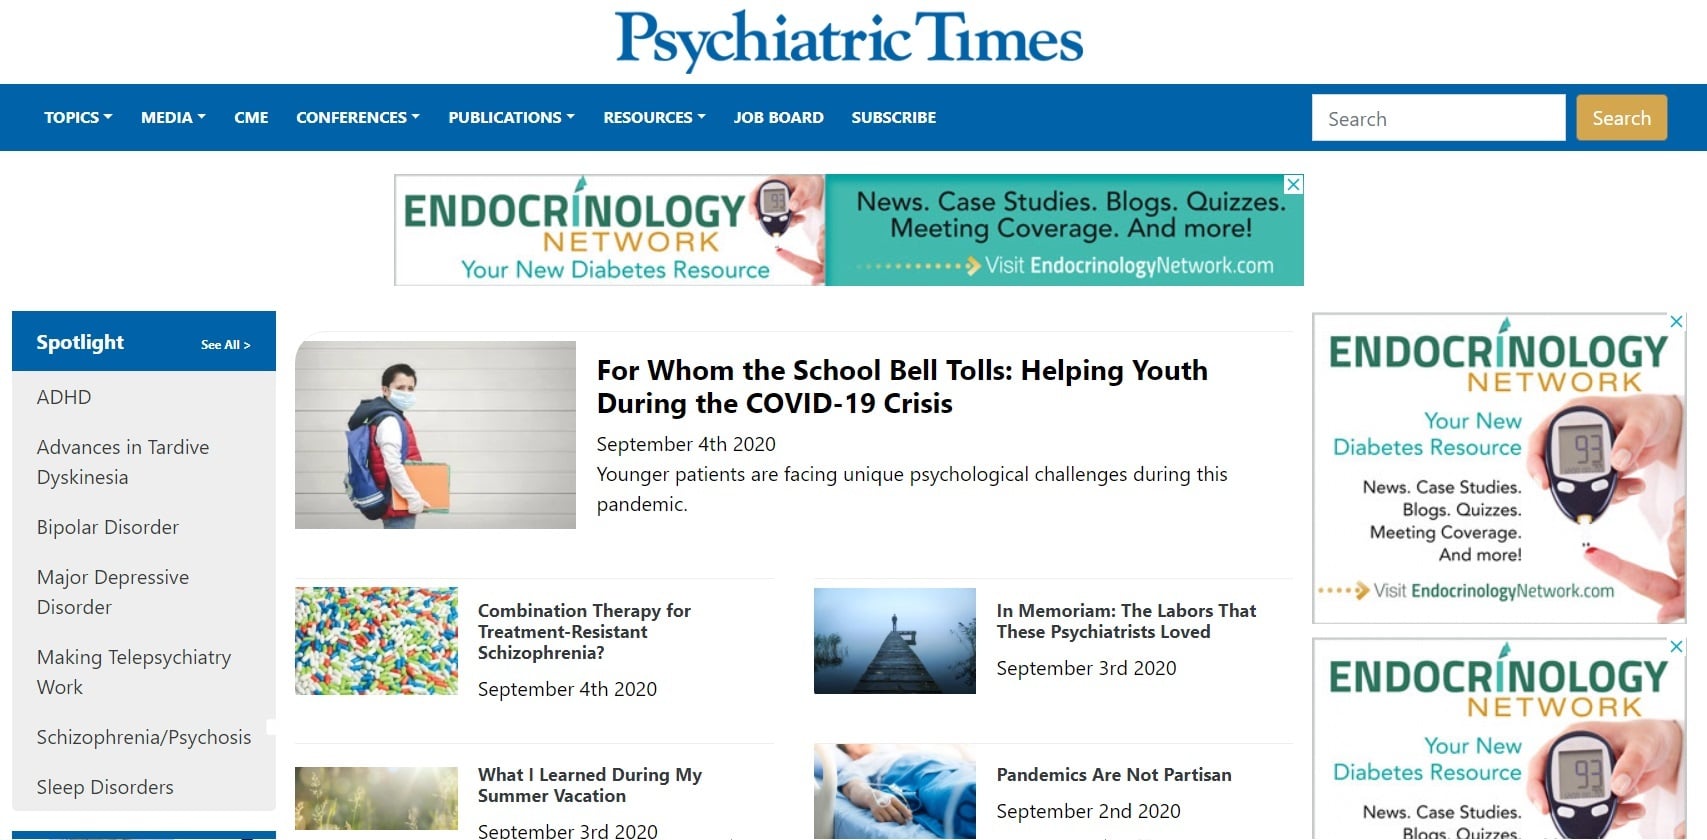 psychiatric times | best psychology websites | psychology websites for high school students